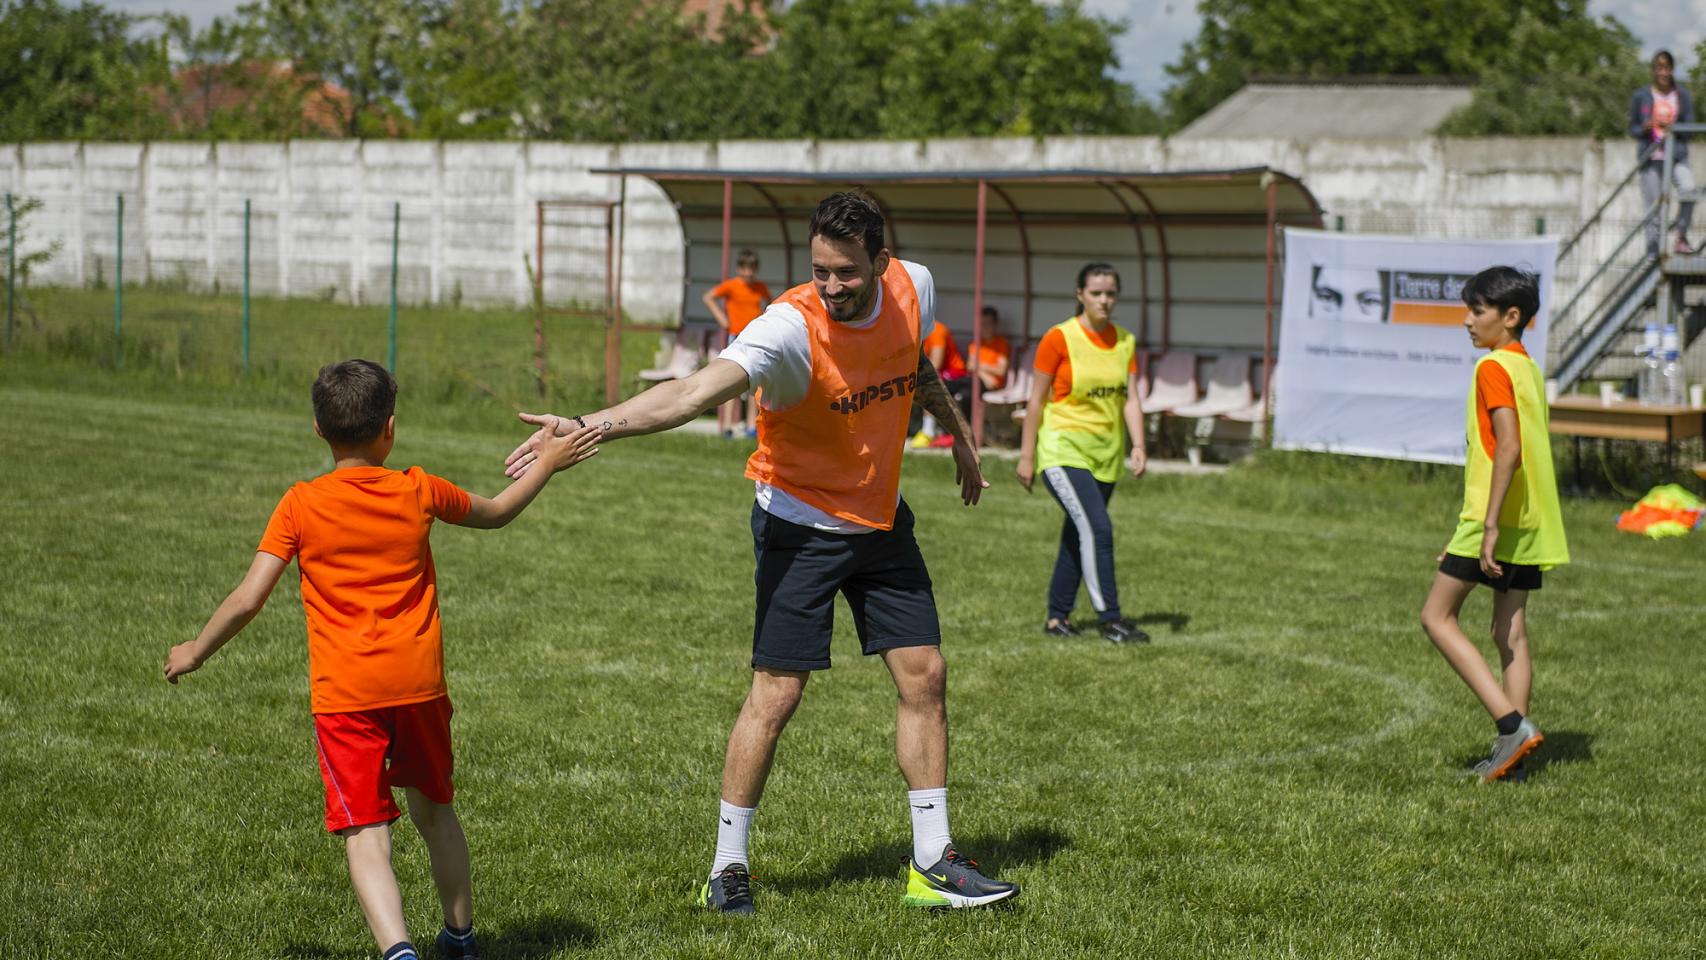 [Romania] Child Safeguarding in Sport Promoted by Roman Bürki, Terre des hommes Ambassador and Goalkeeper at Borussia Dortmund